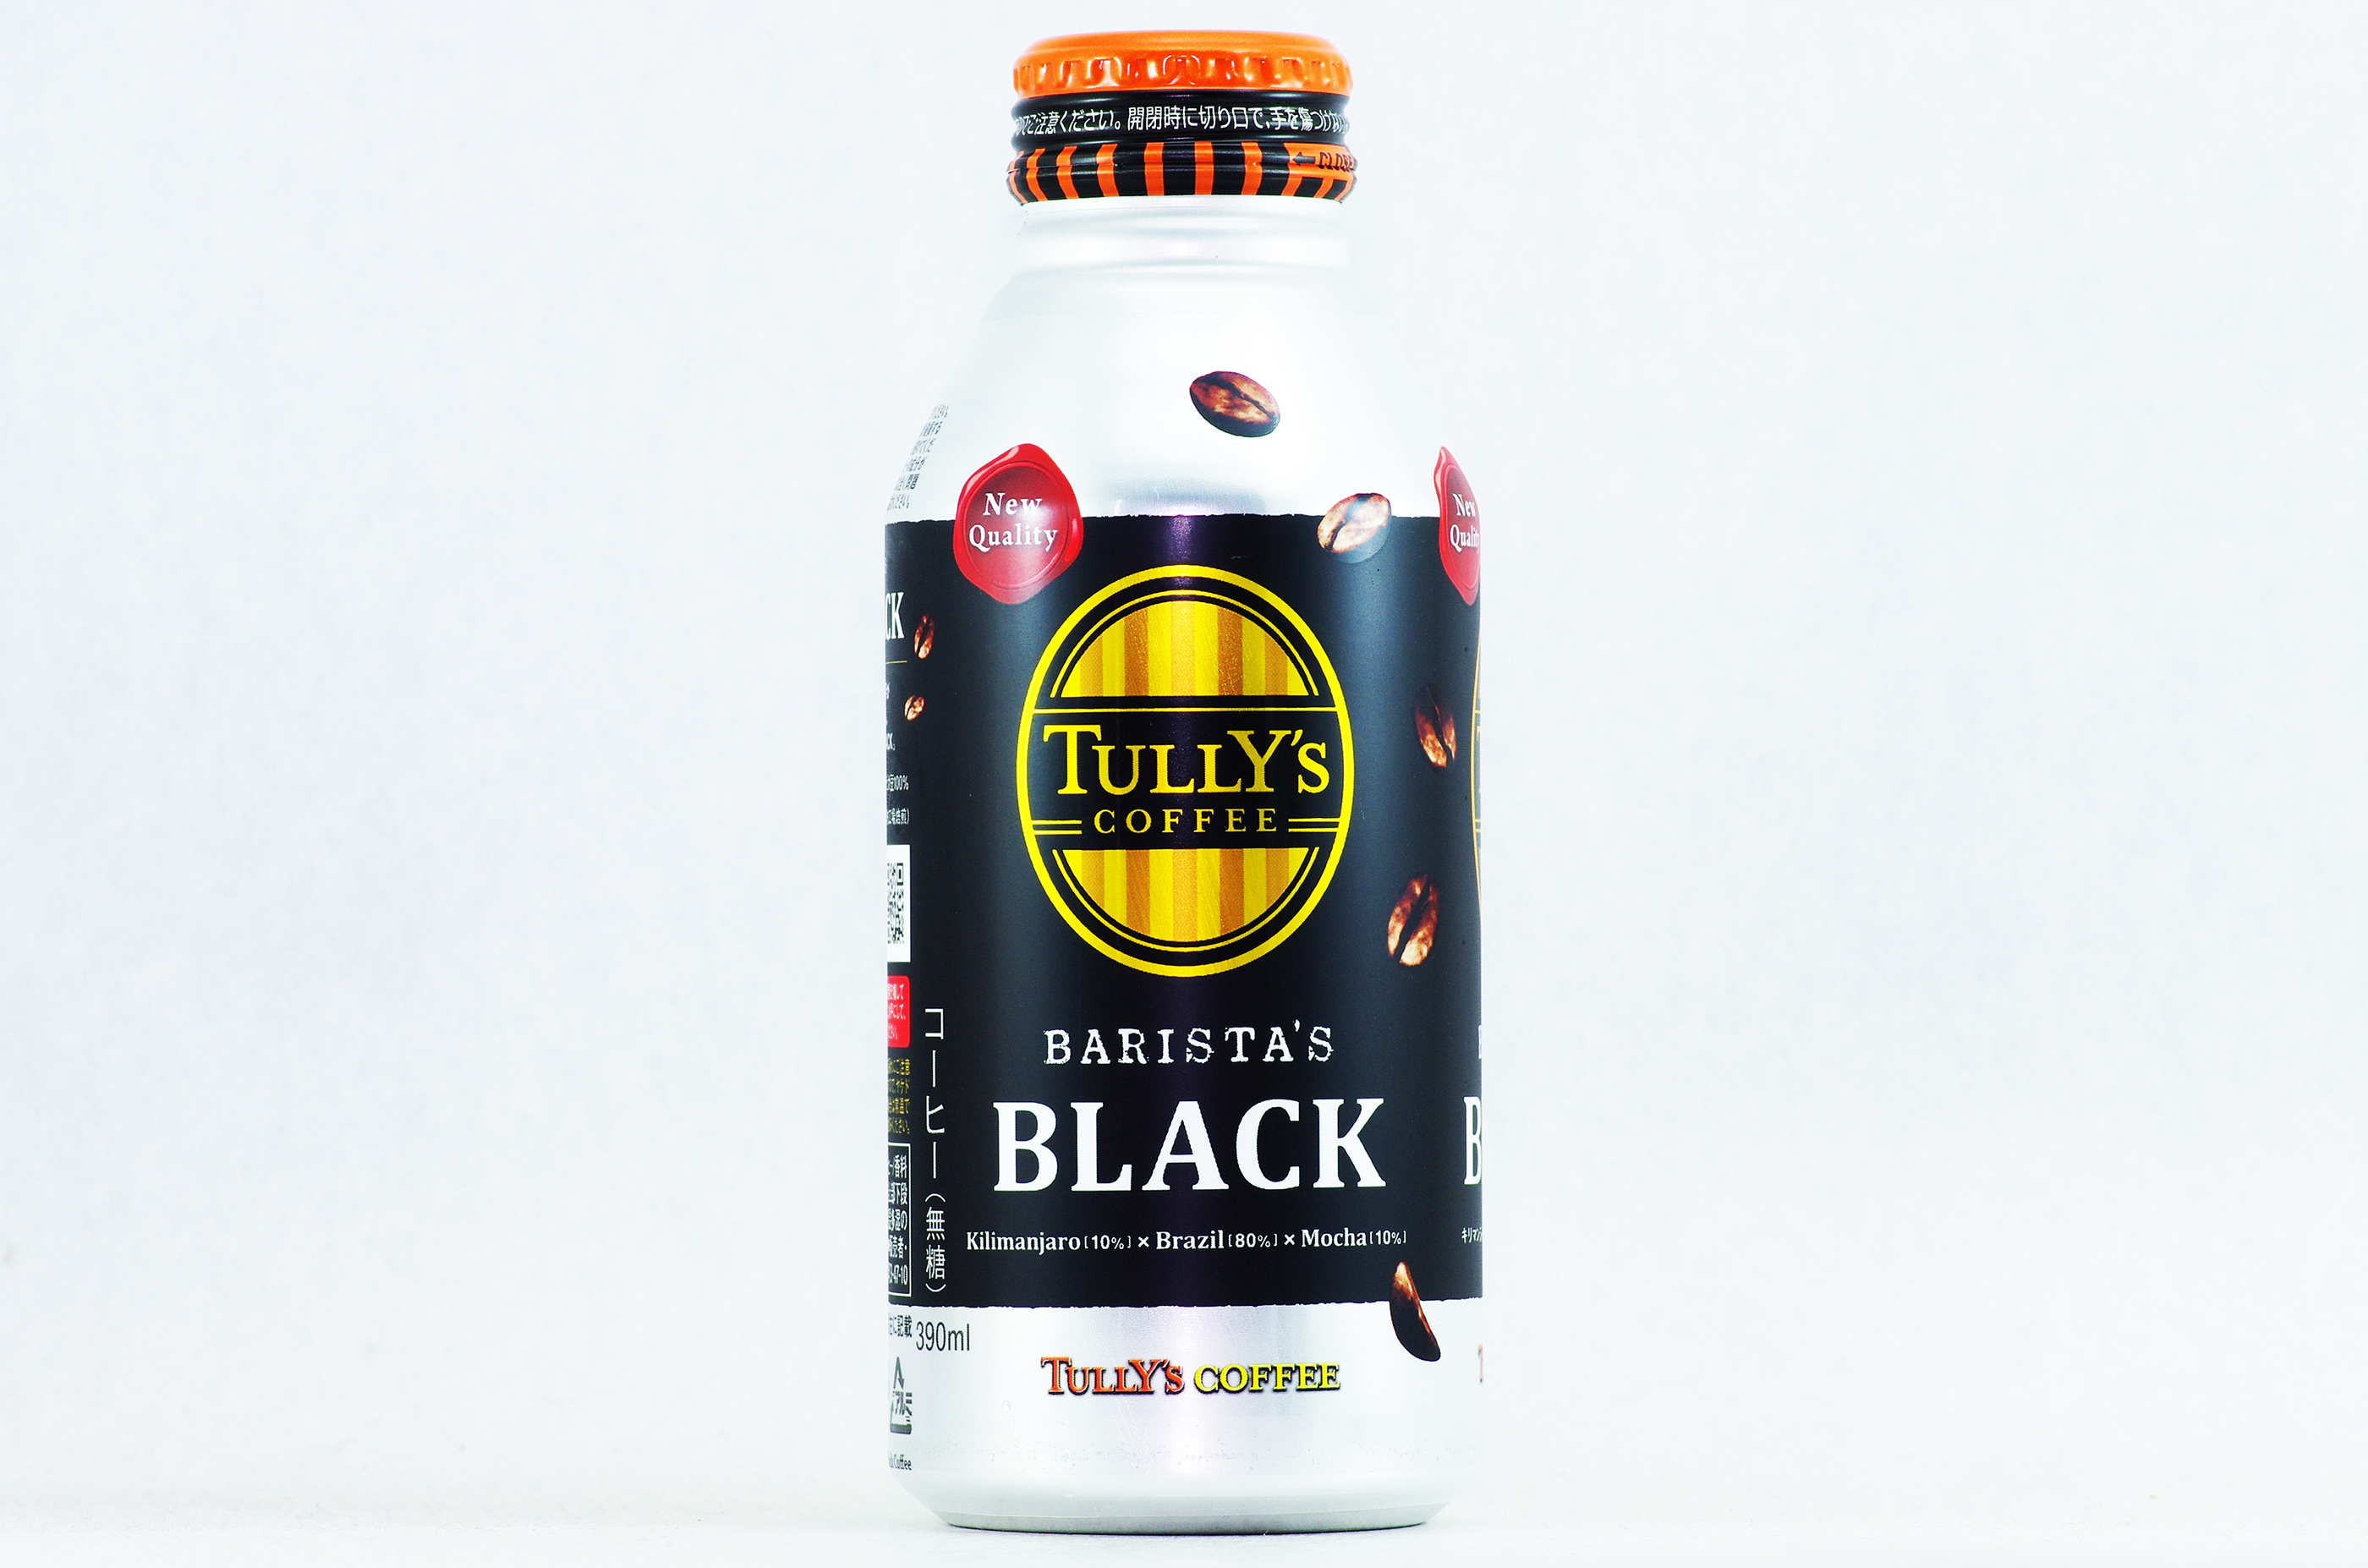 TULLY'S COFFEE BARISTA'S BLACK 2018年10月